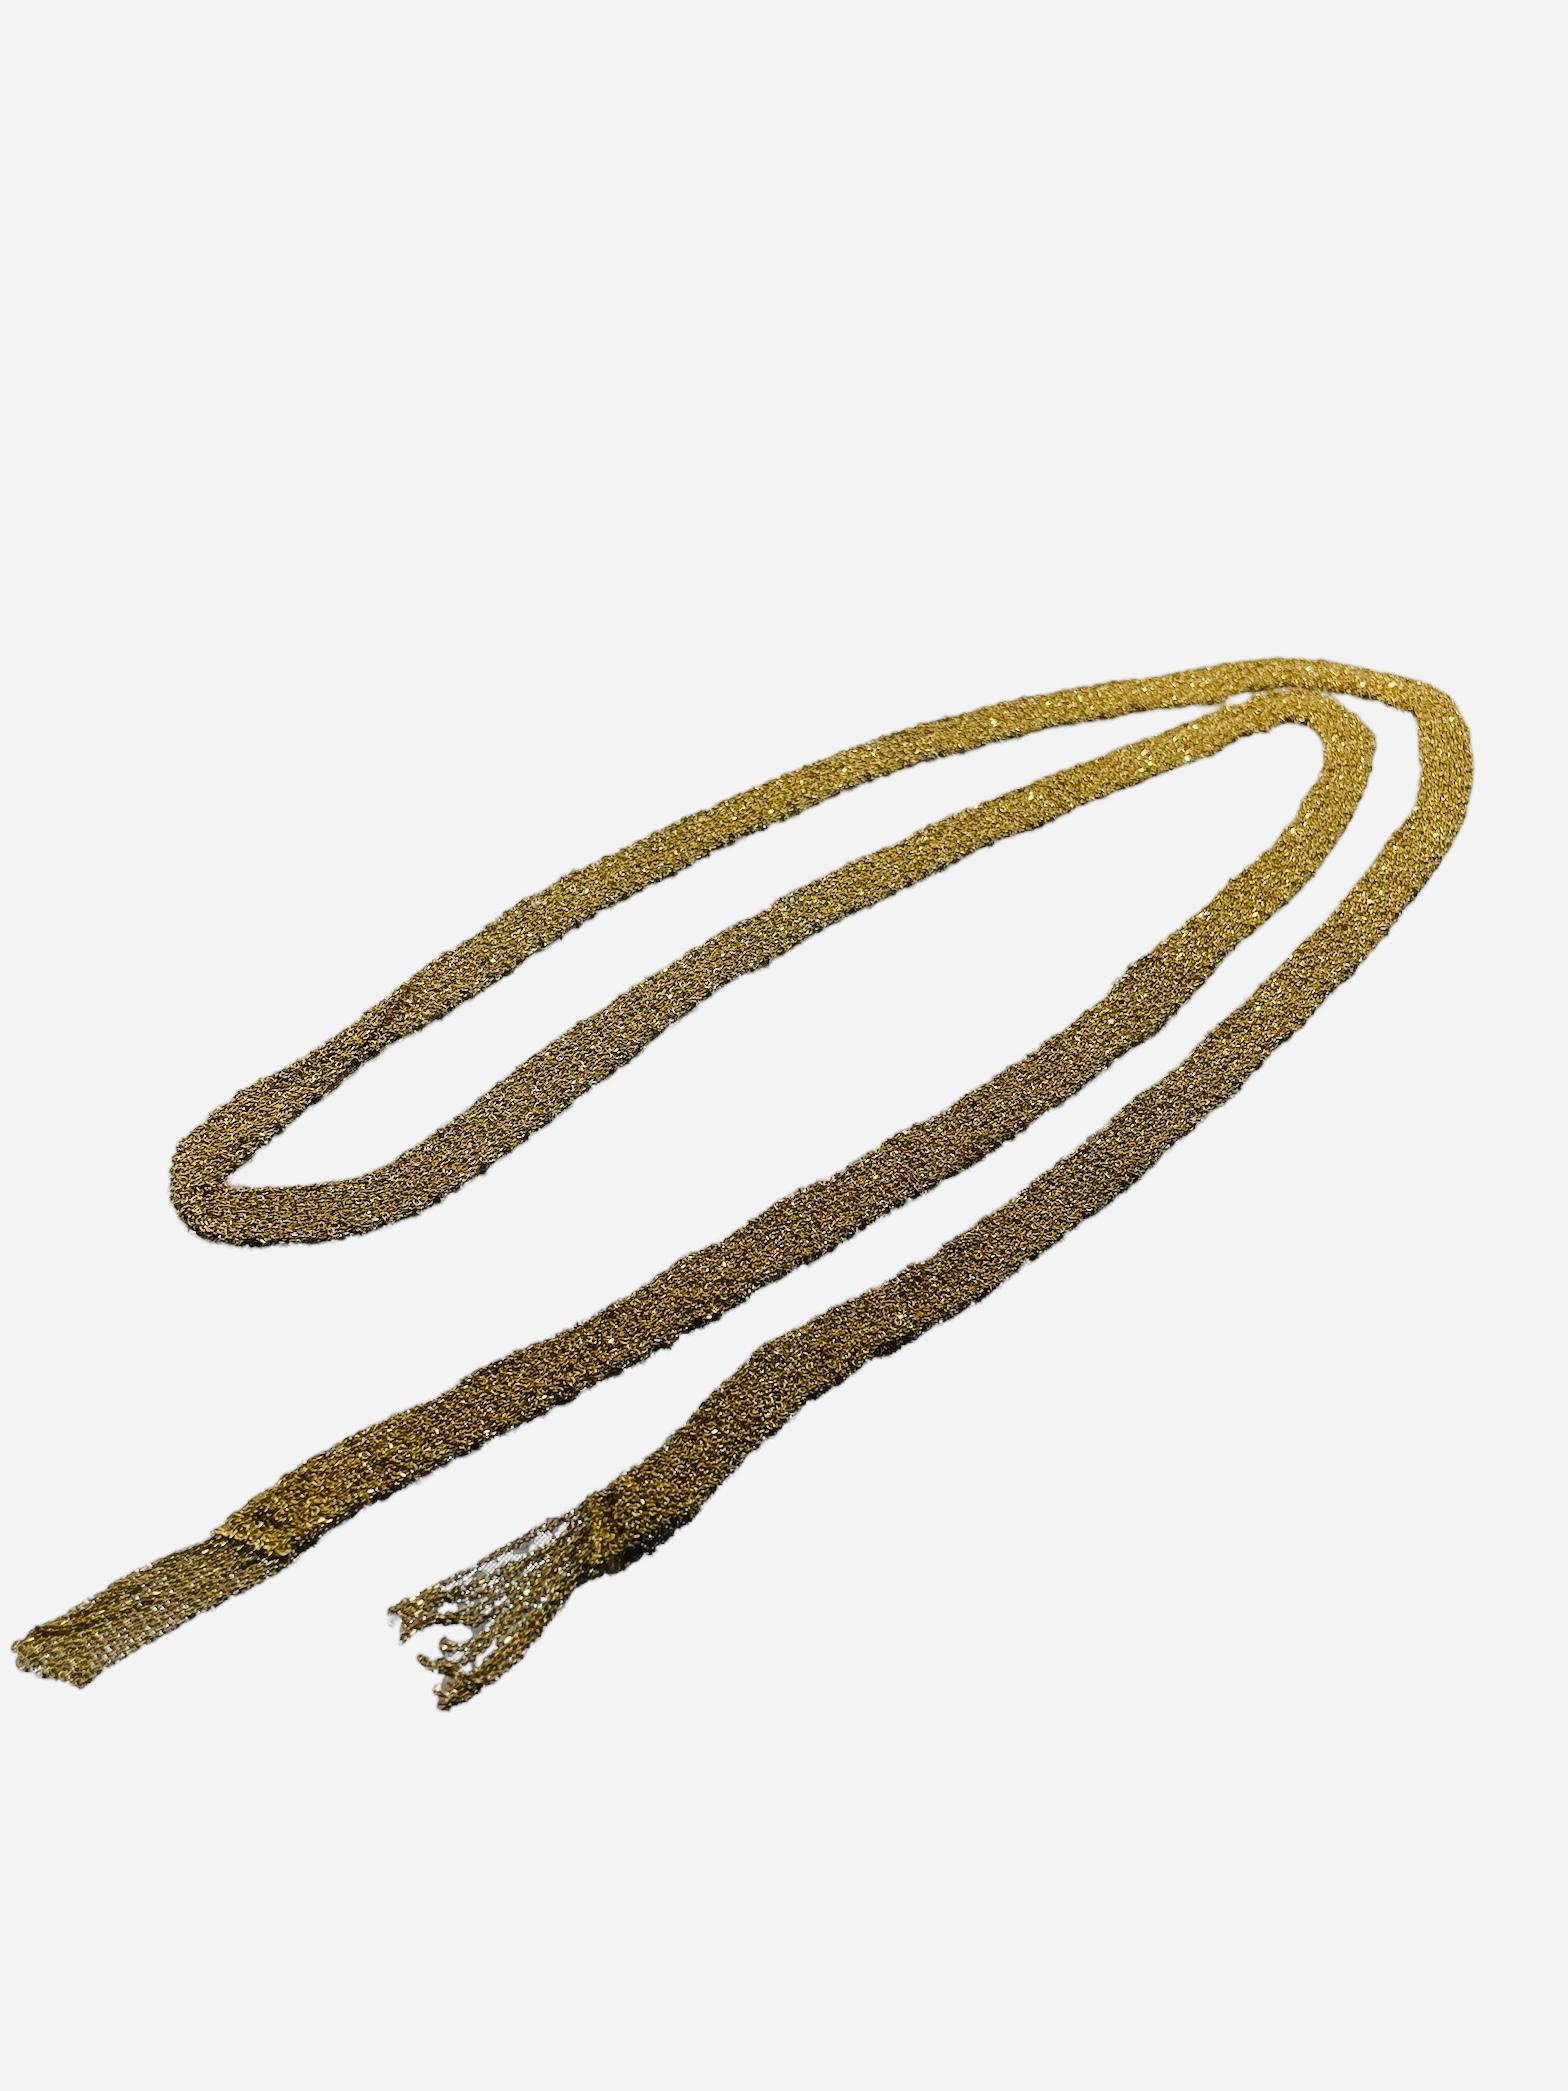 Italian 18K Gold Lariat Mesh Tassel Necklace  For Sale 5